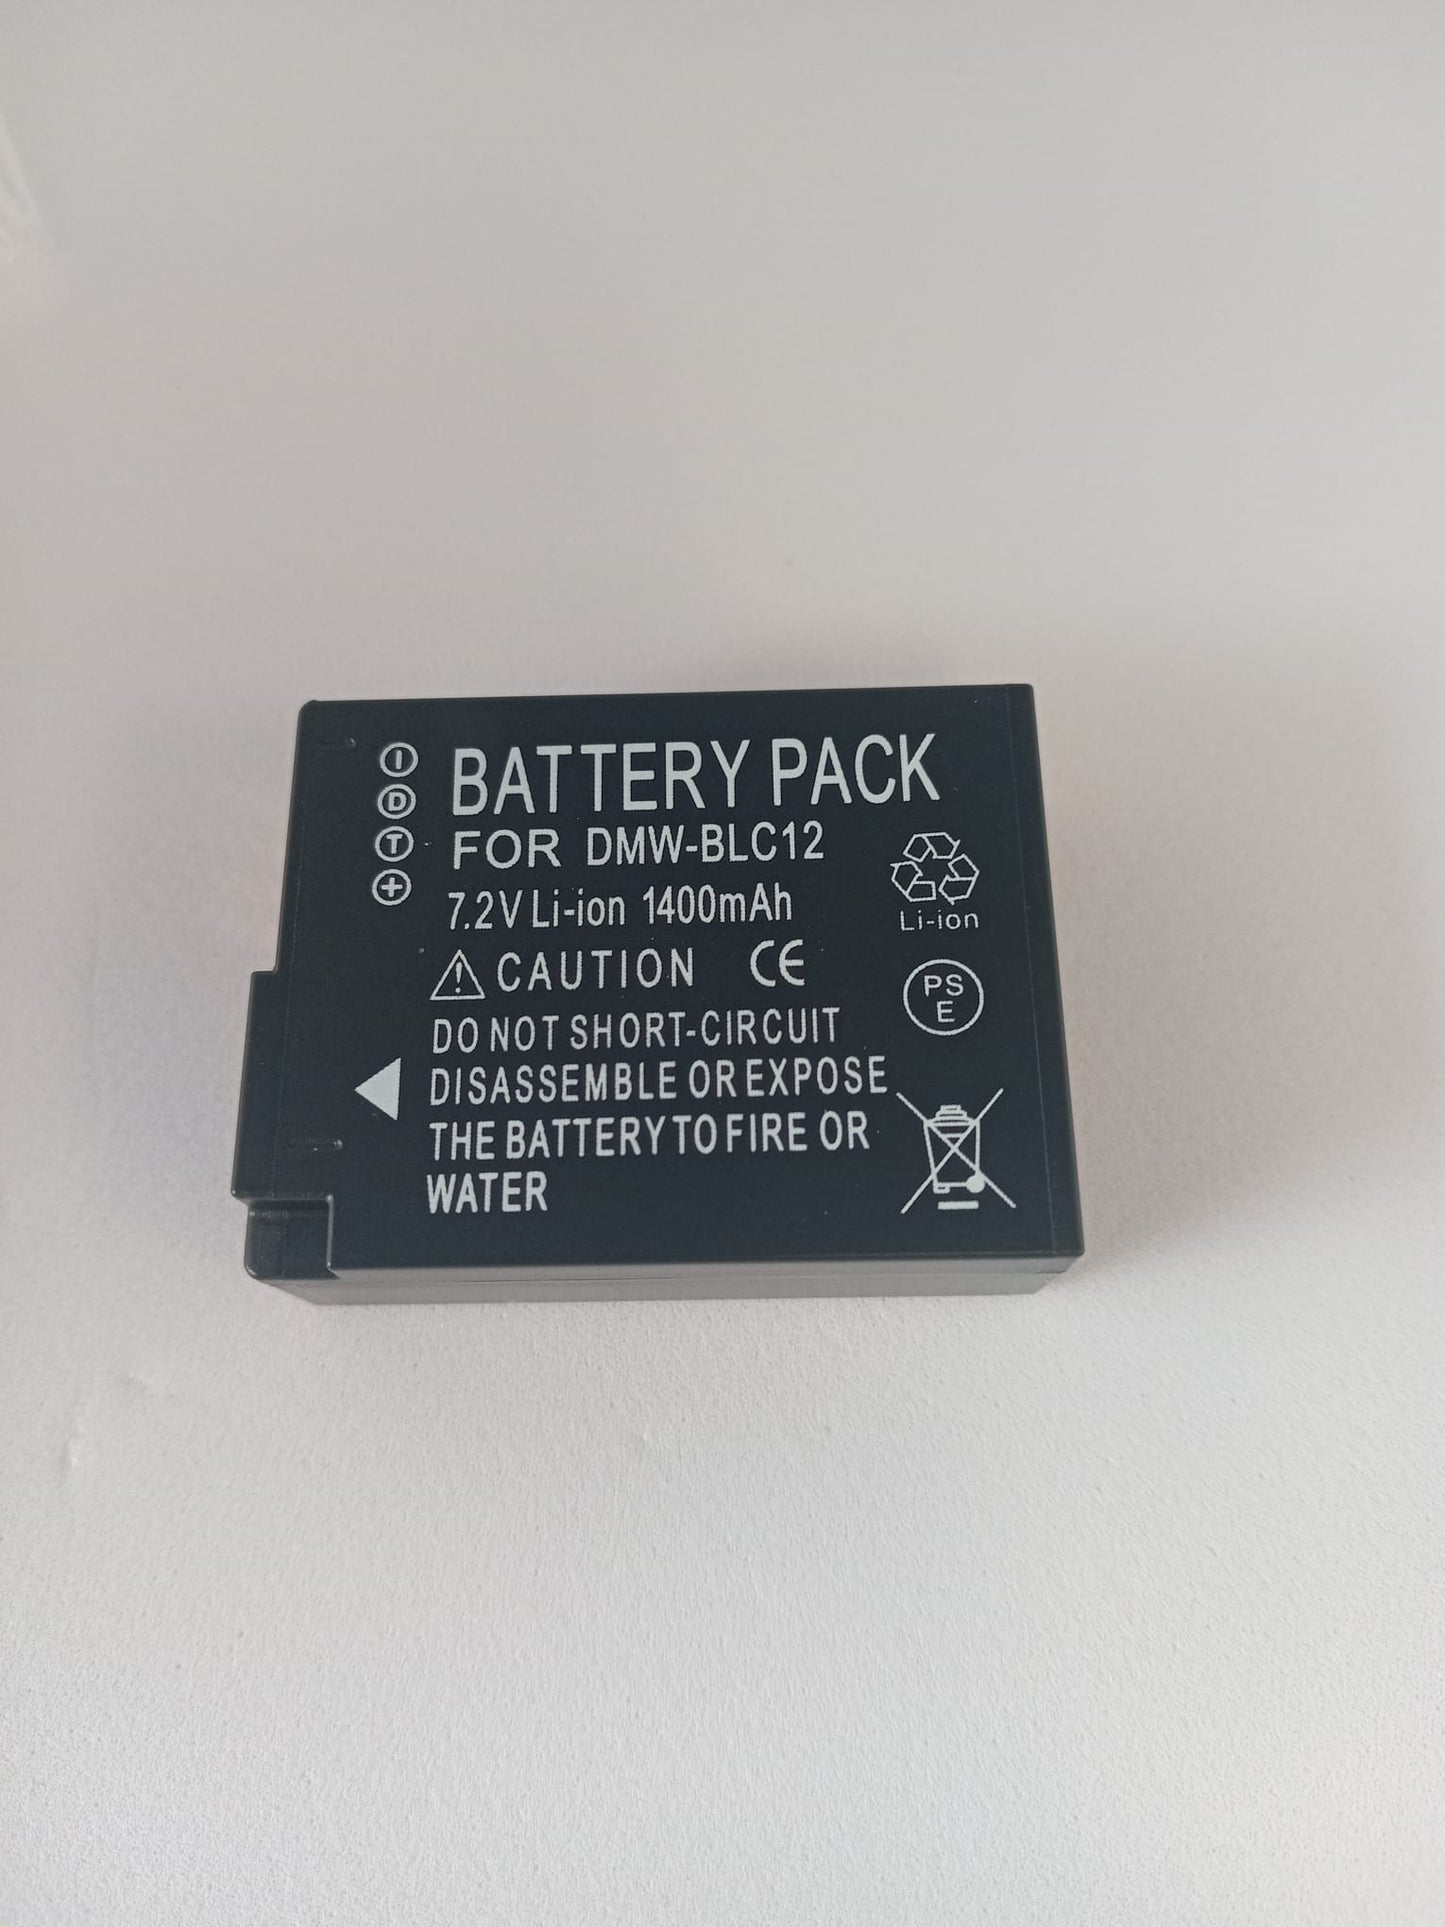 Digital video Battery for DMW-BLC12